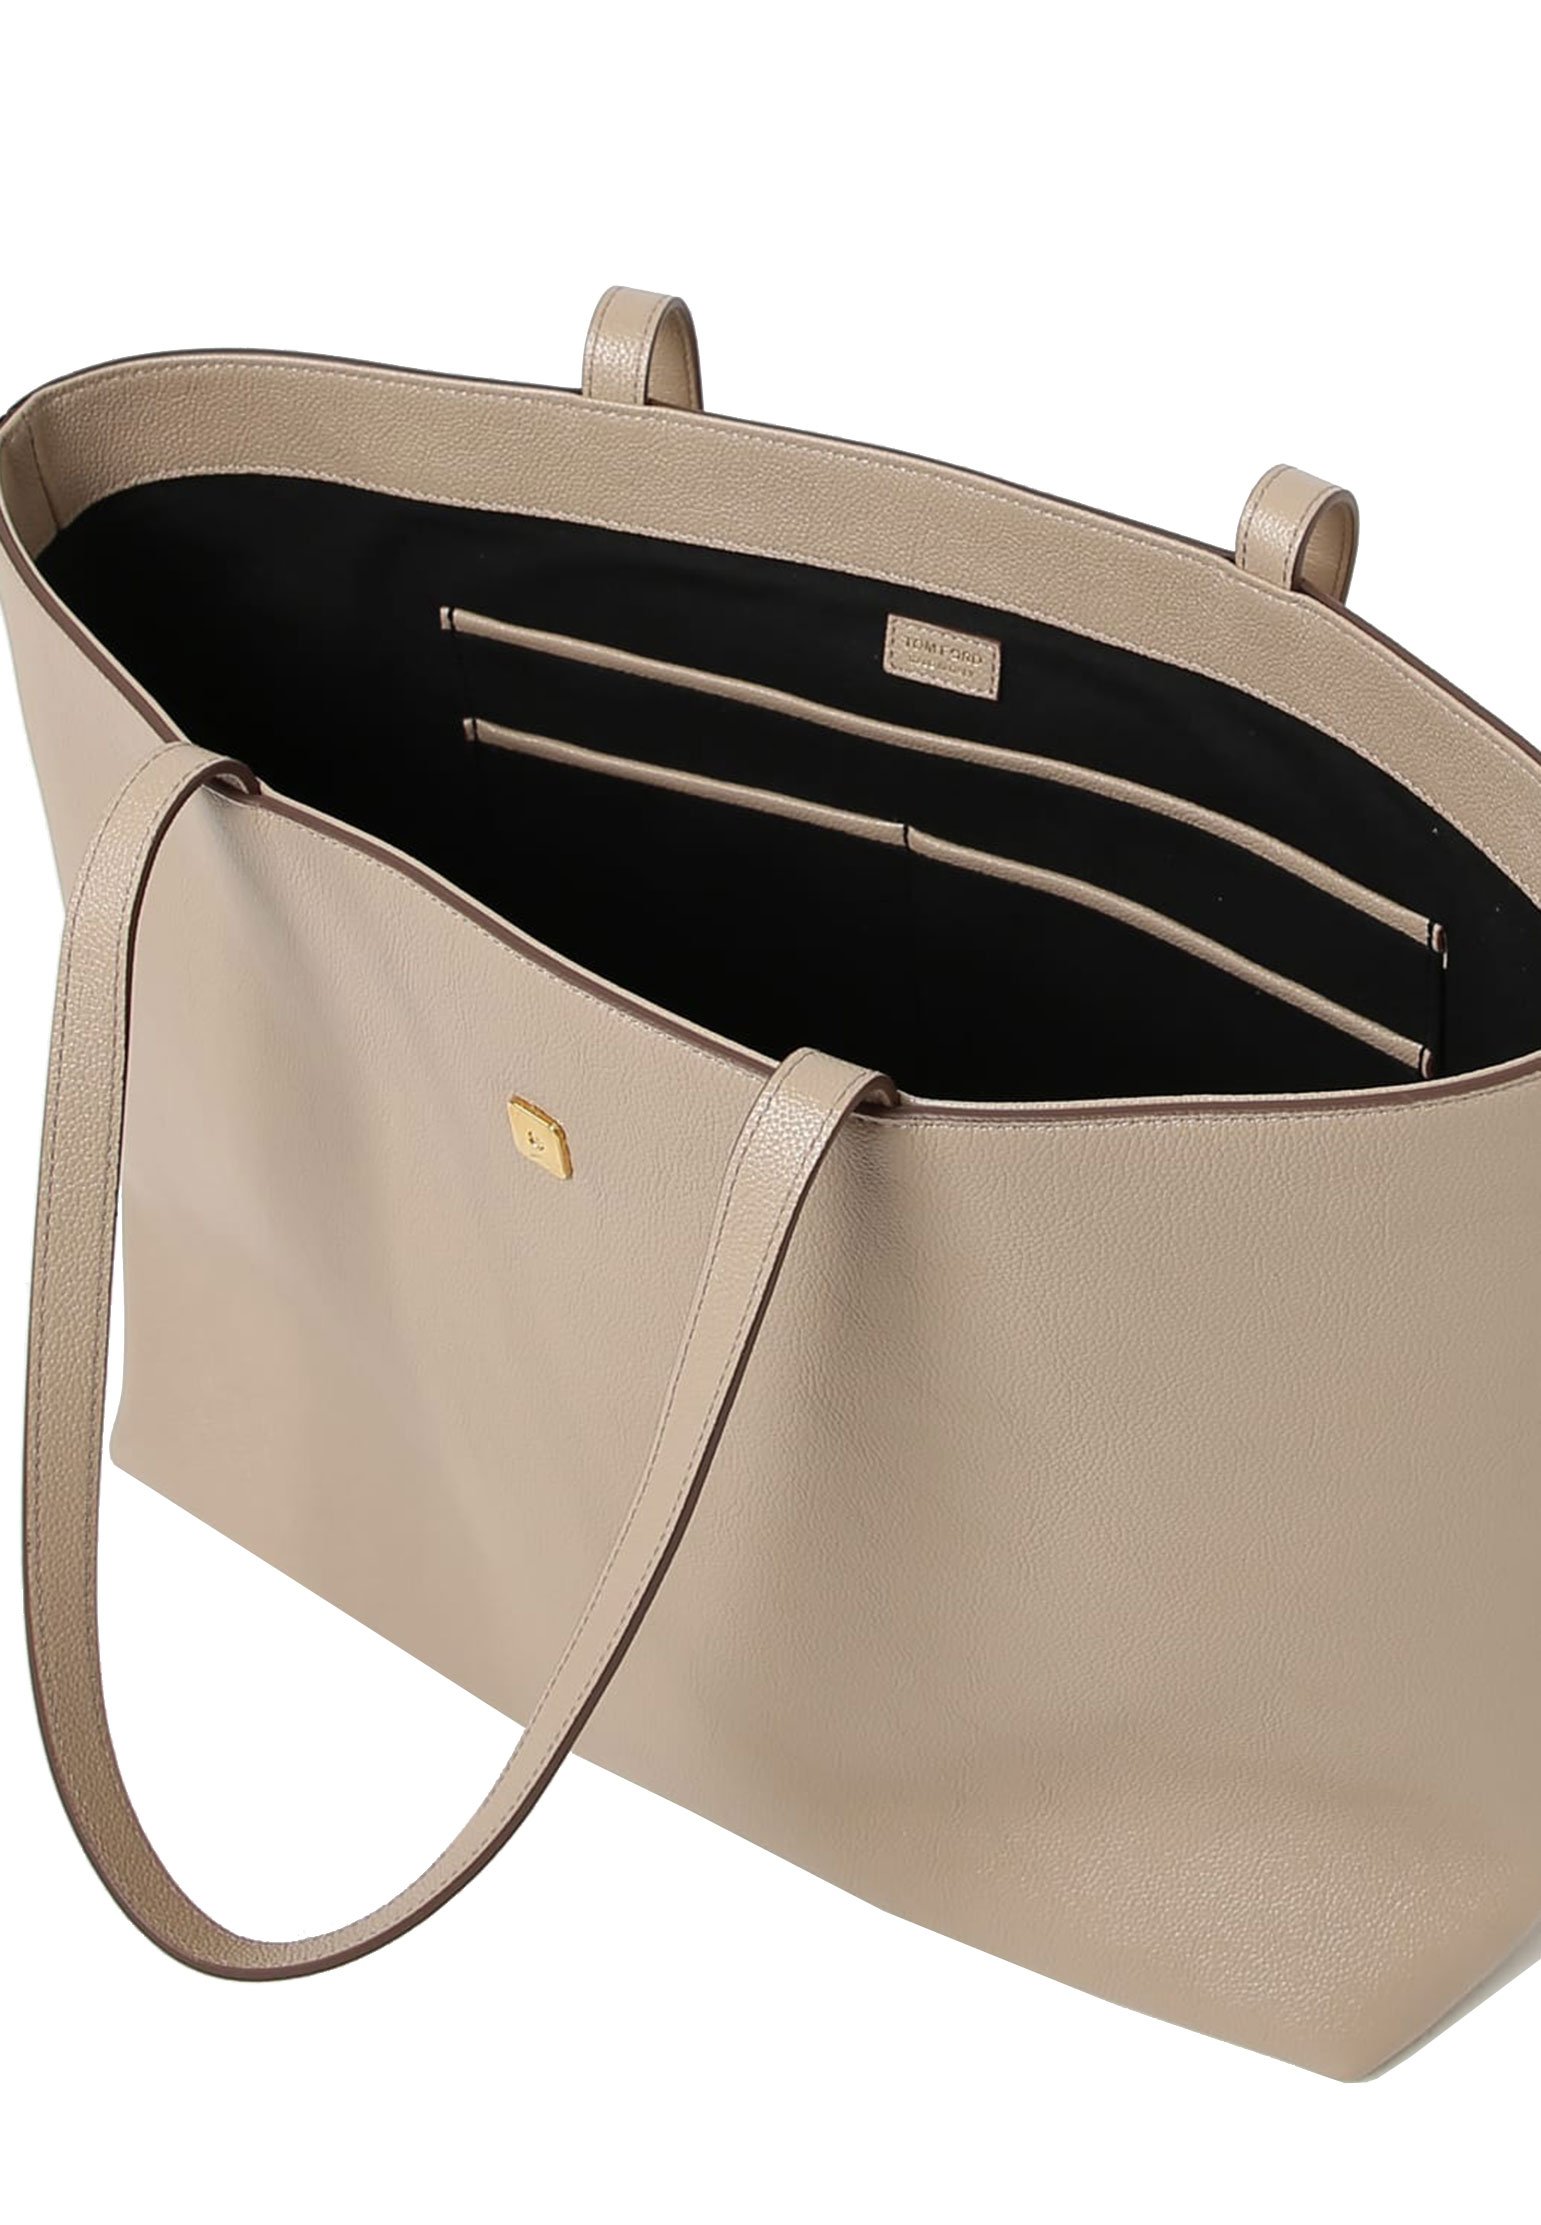 Bag TOM FORD Color: beige (Code: 2975) in online store Allure